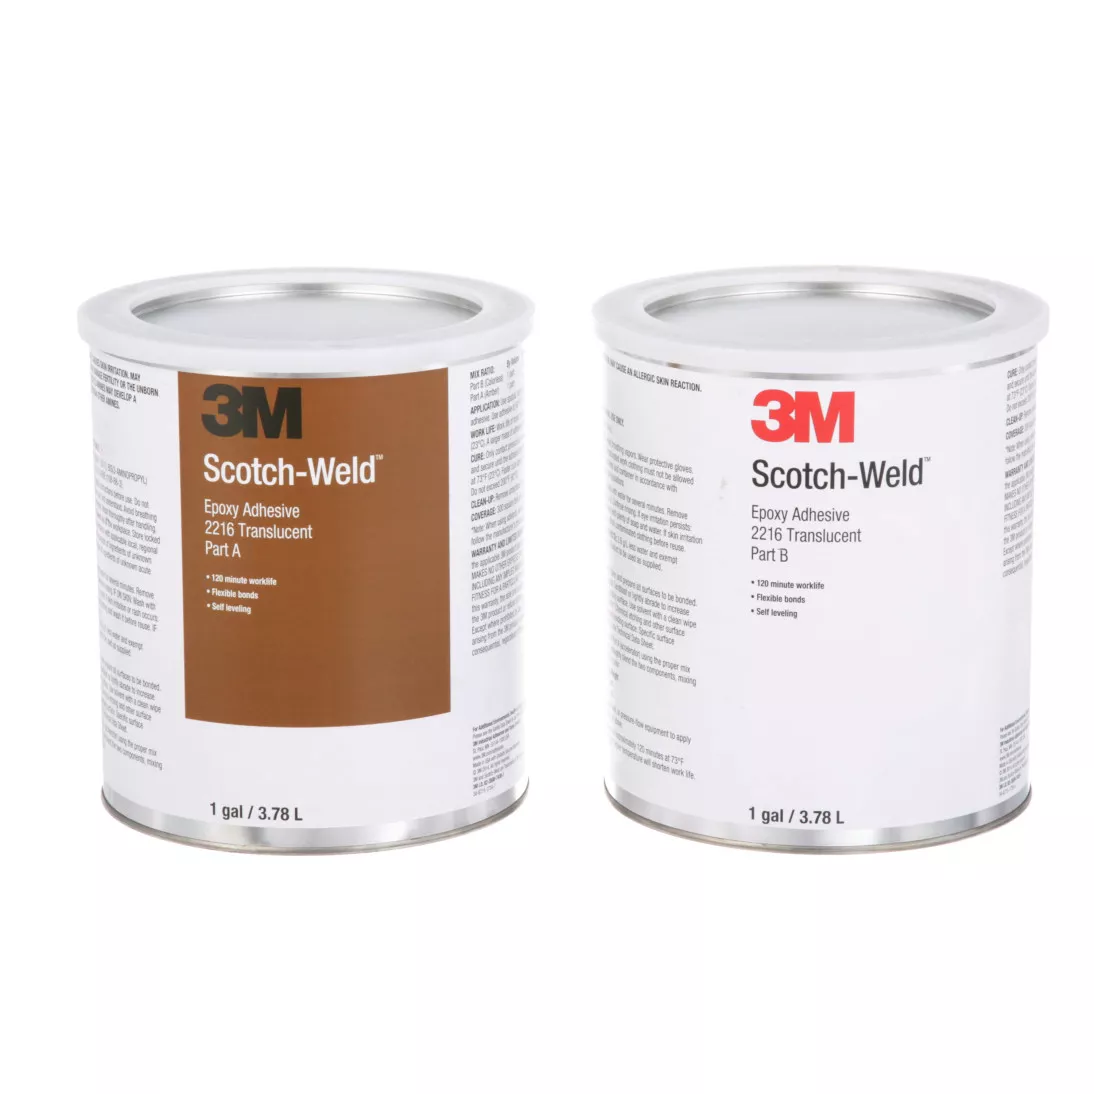 3M™ Scotch-Weld™ Epoxy Adhesive 2216, Translucent, Part B/A, 1 Gallon
Kit, 2/case